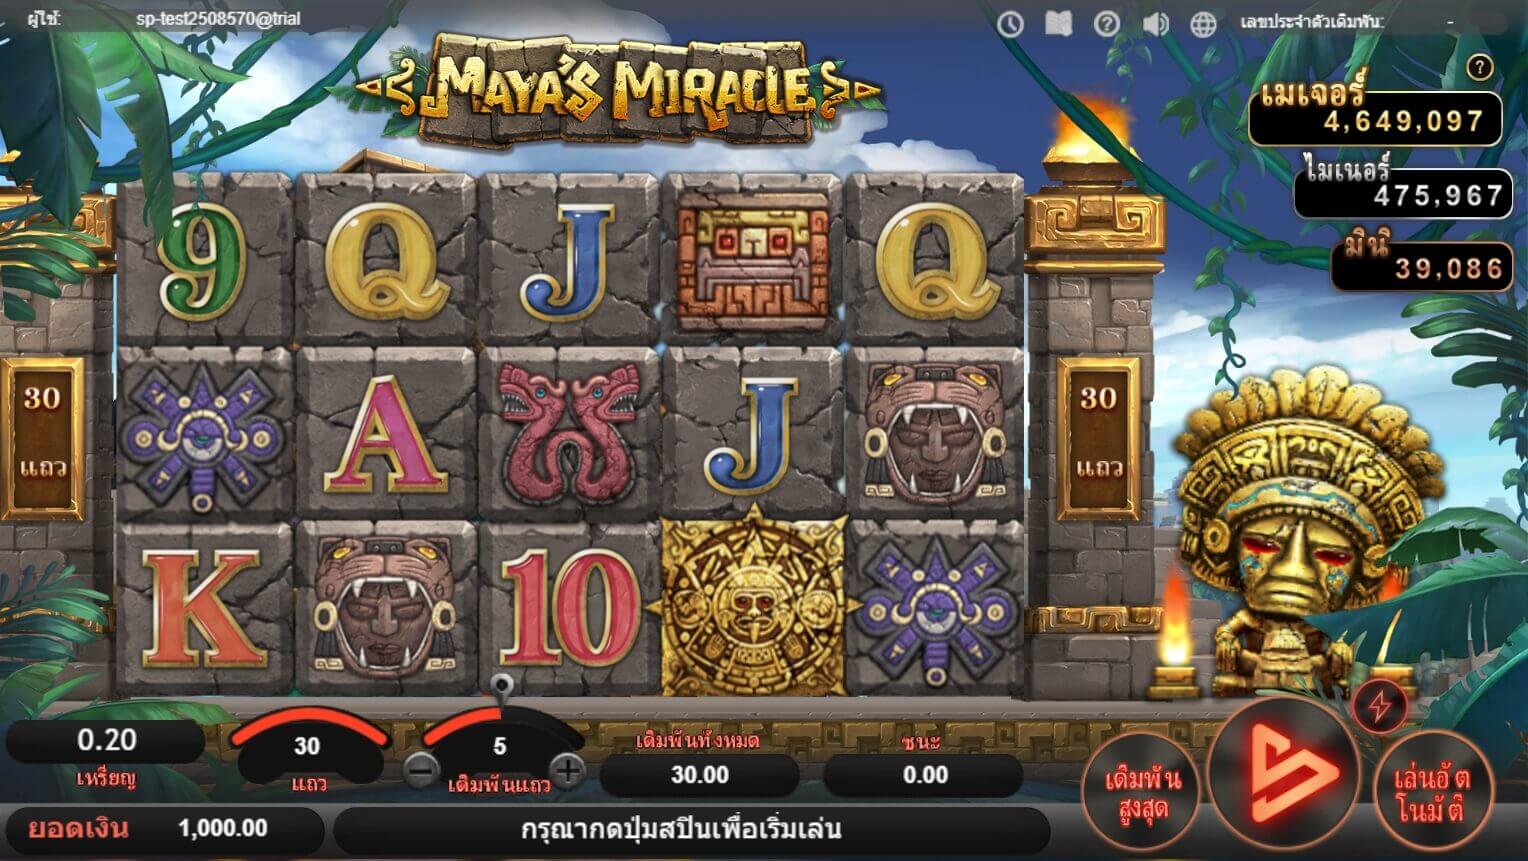 Maya's Miracle SimplePlay joker gaming